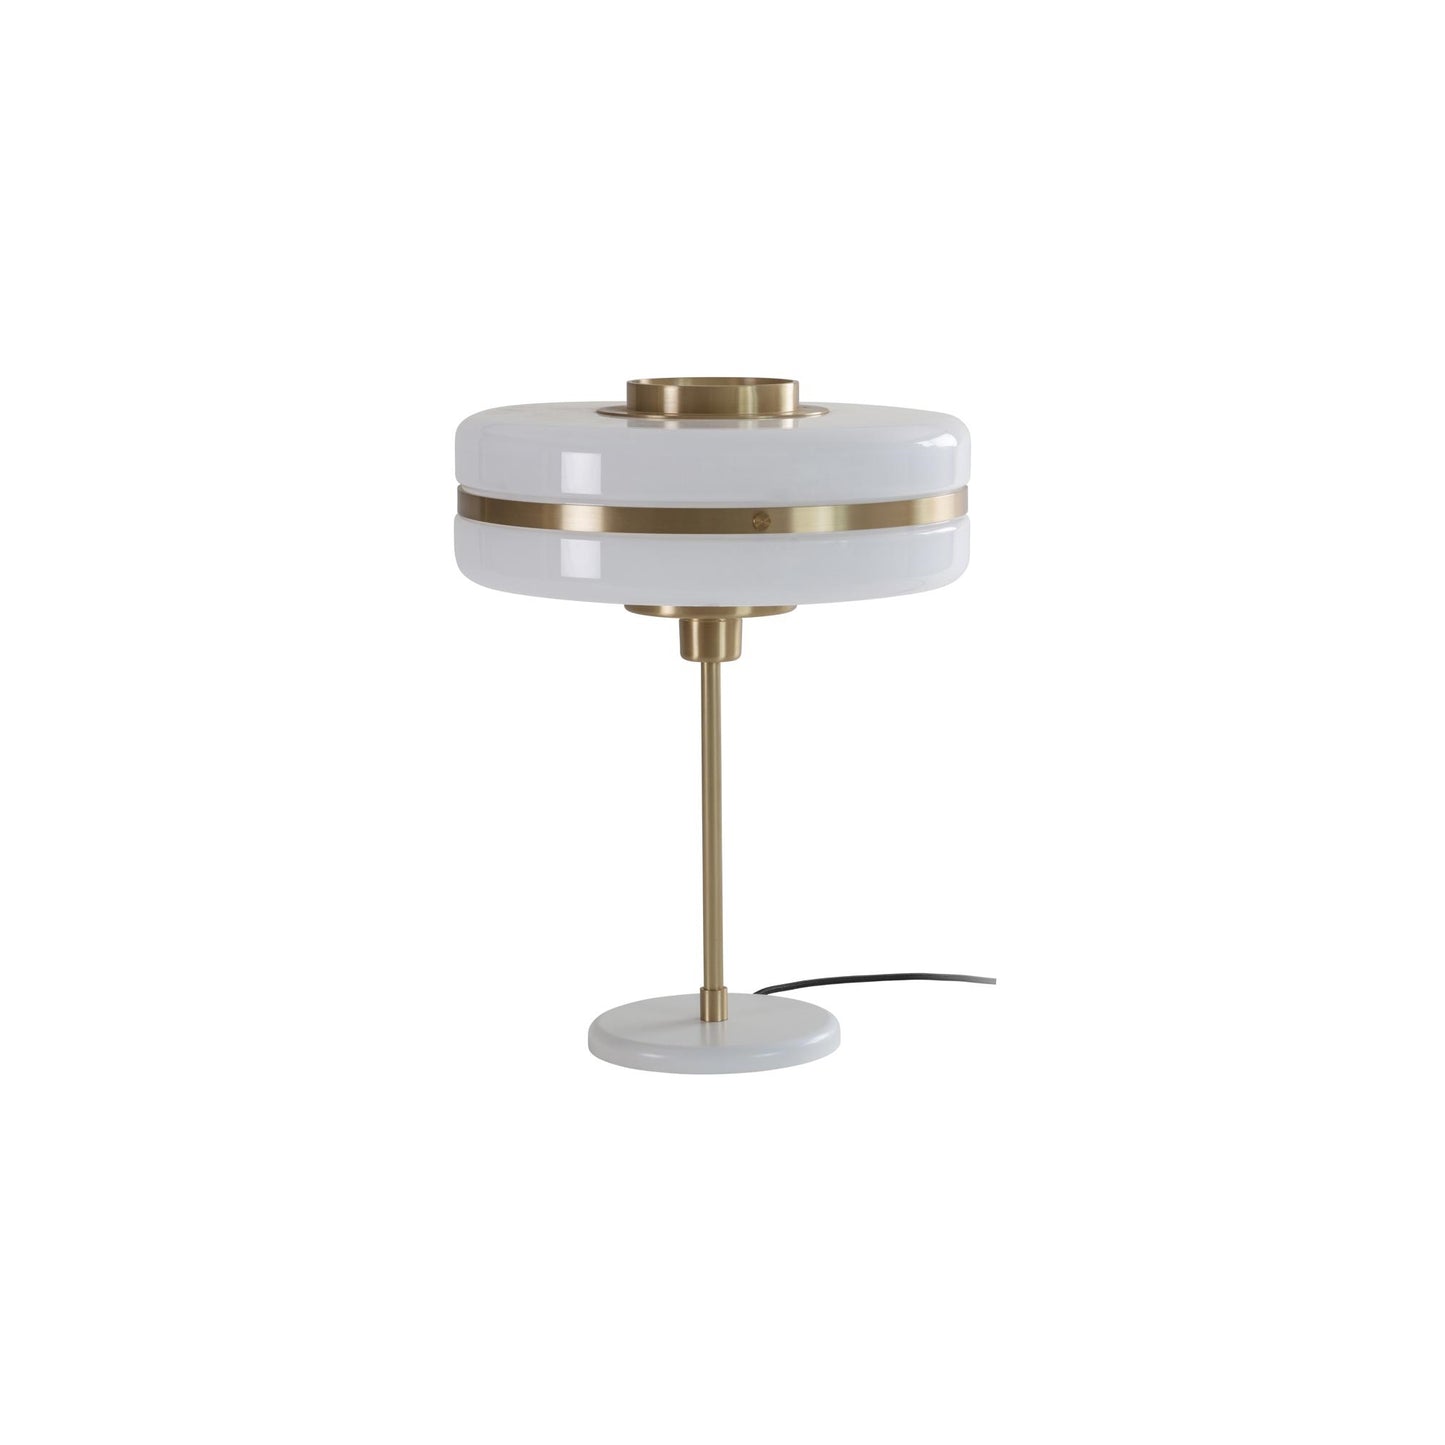 Masina Table Lamp by Bert Frank #Brushed Brass/ Opal Glass